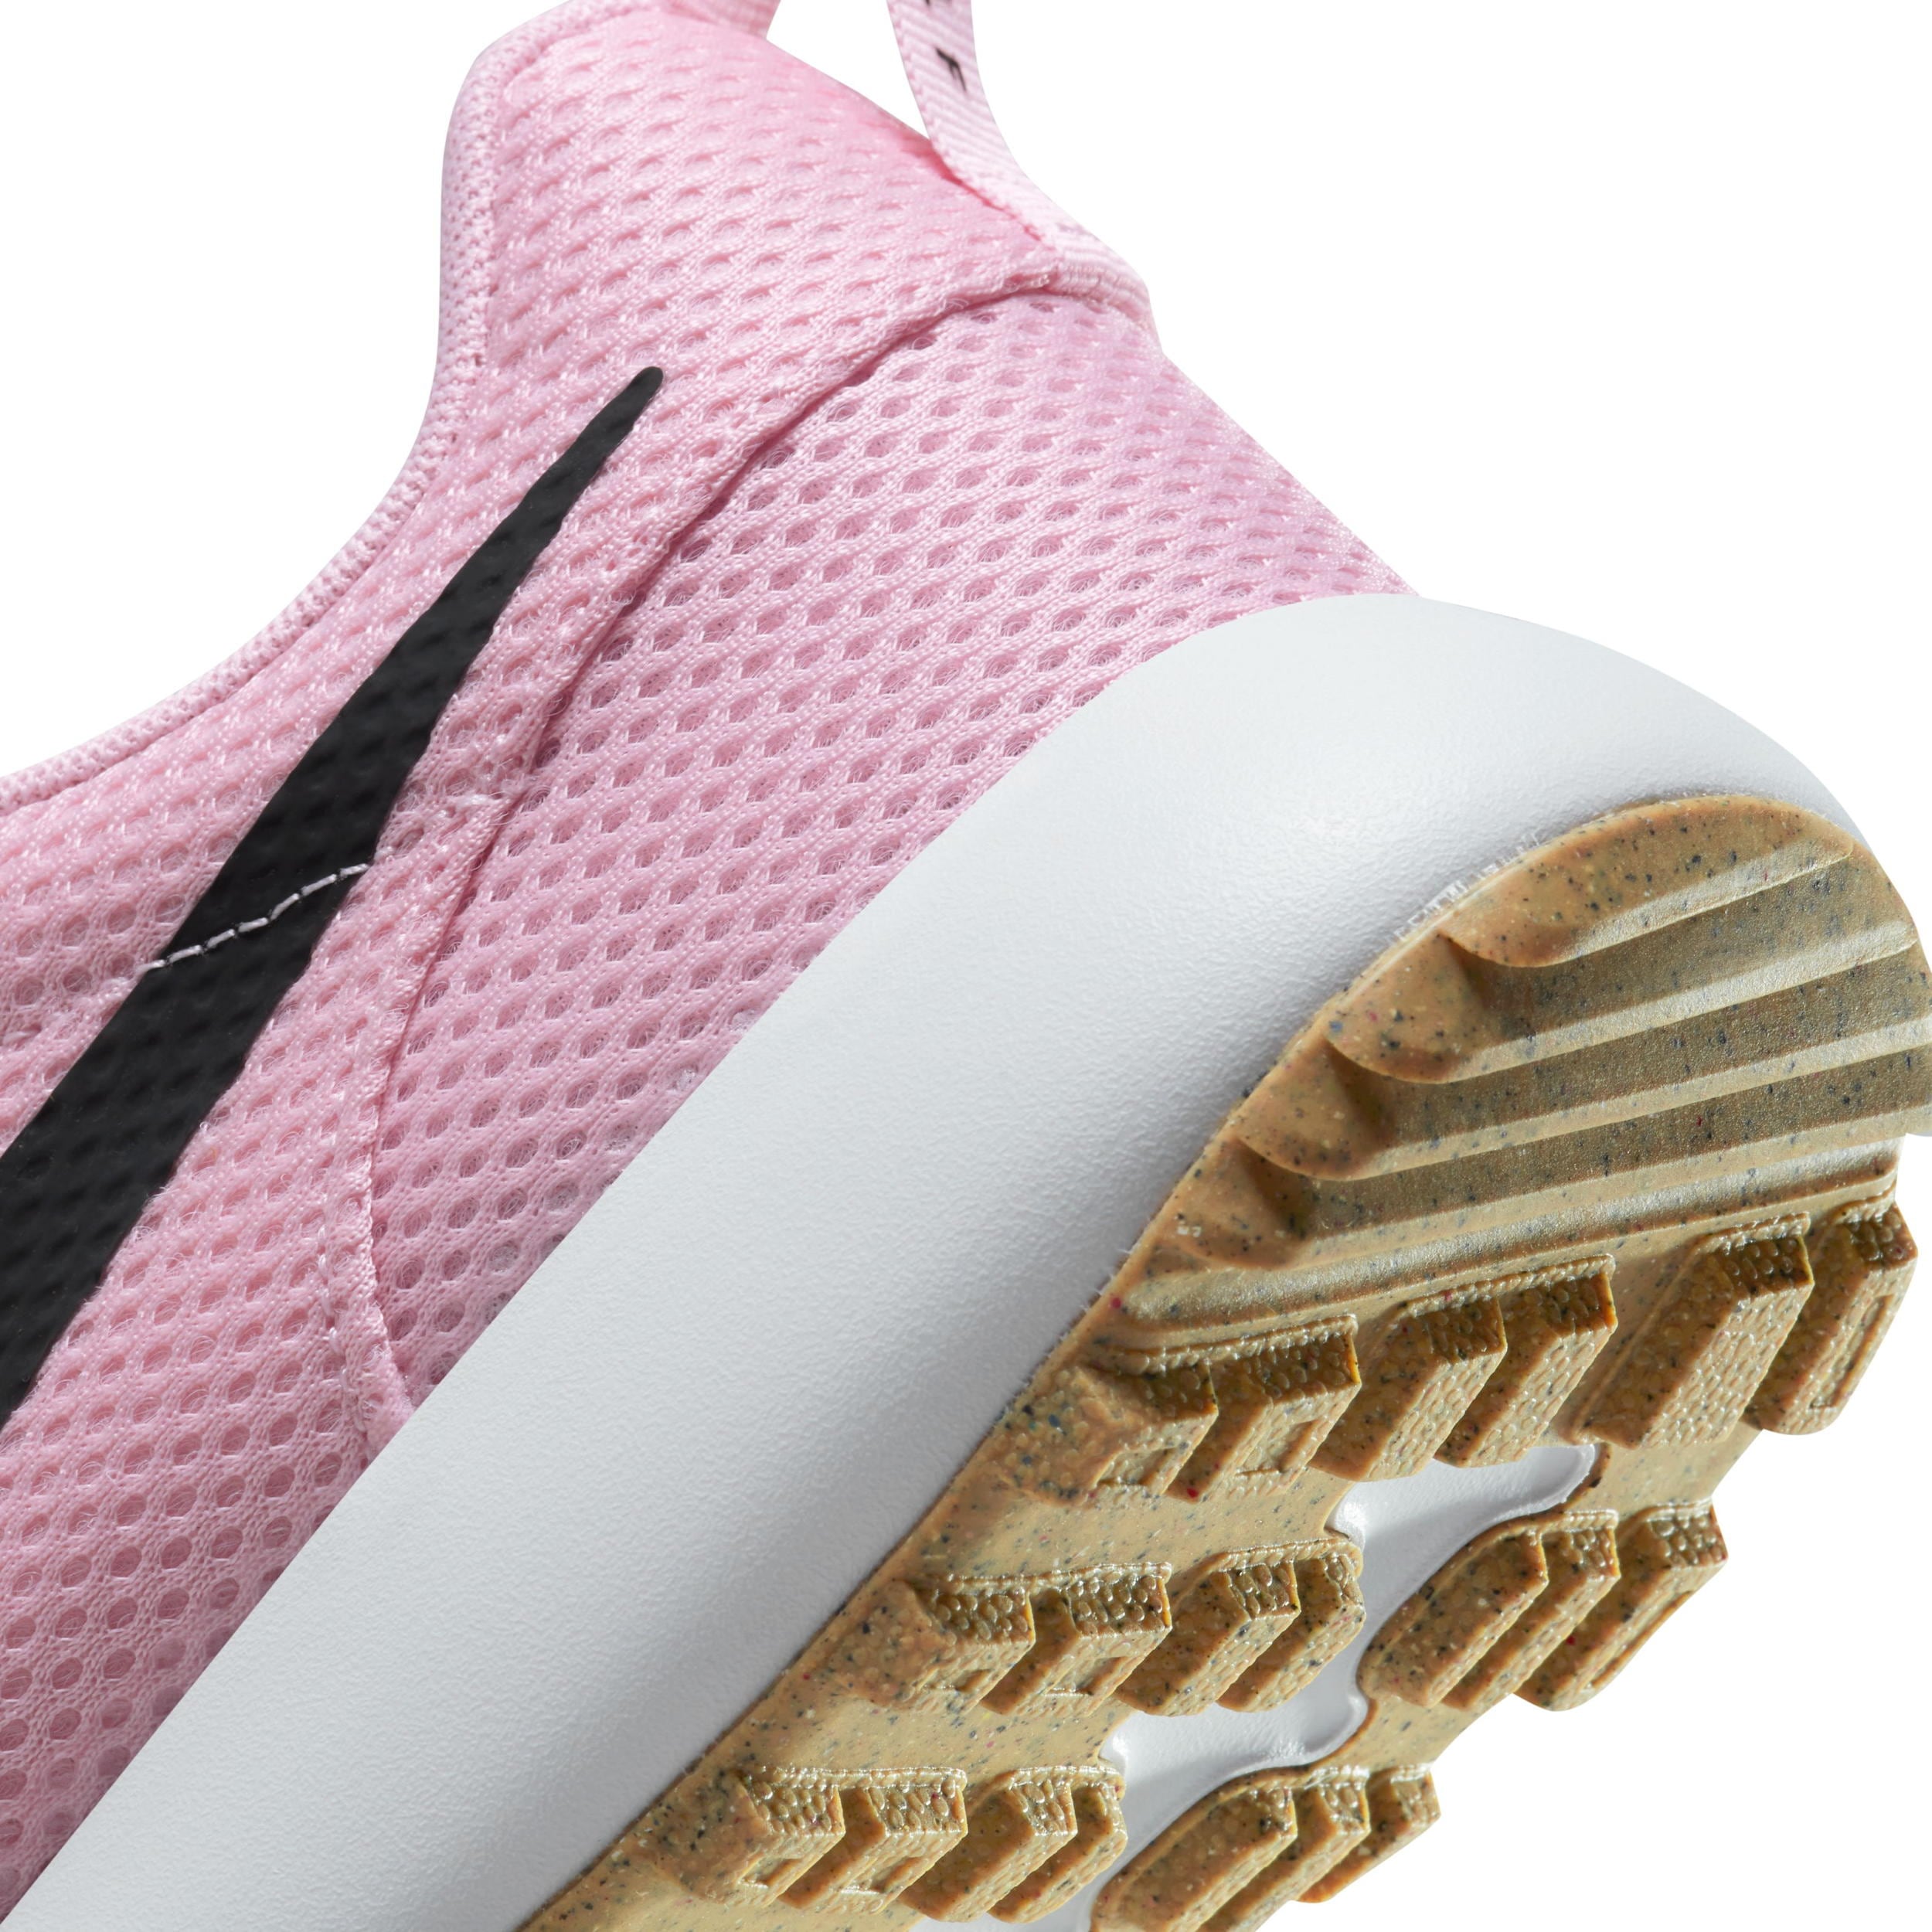 Nike ROSHE G 2.0 Golfschuh, pink/black/white